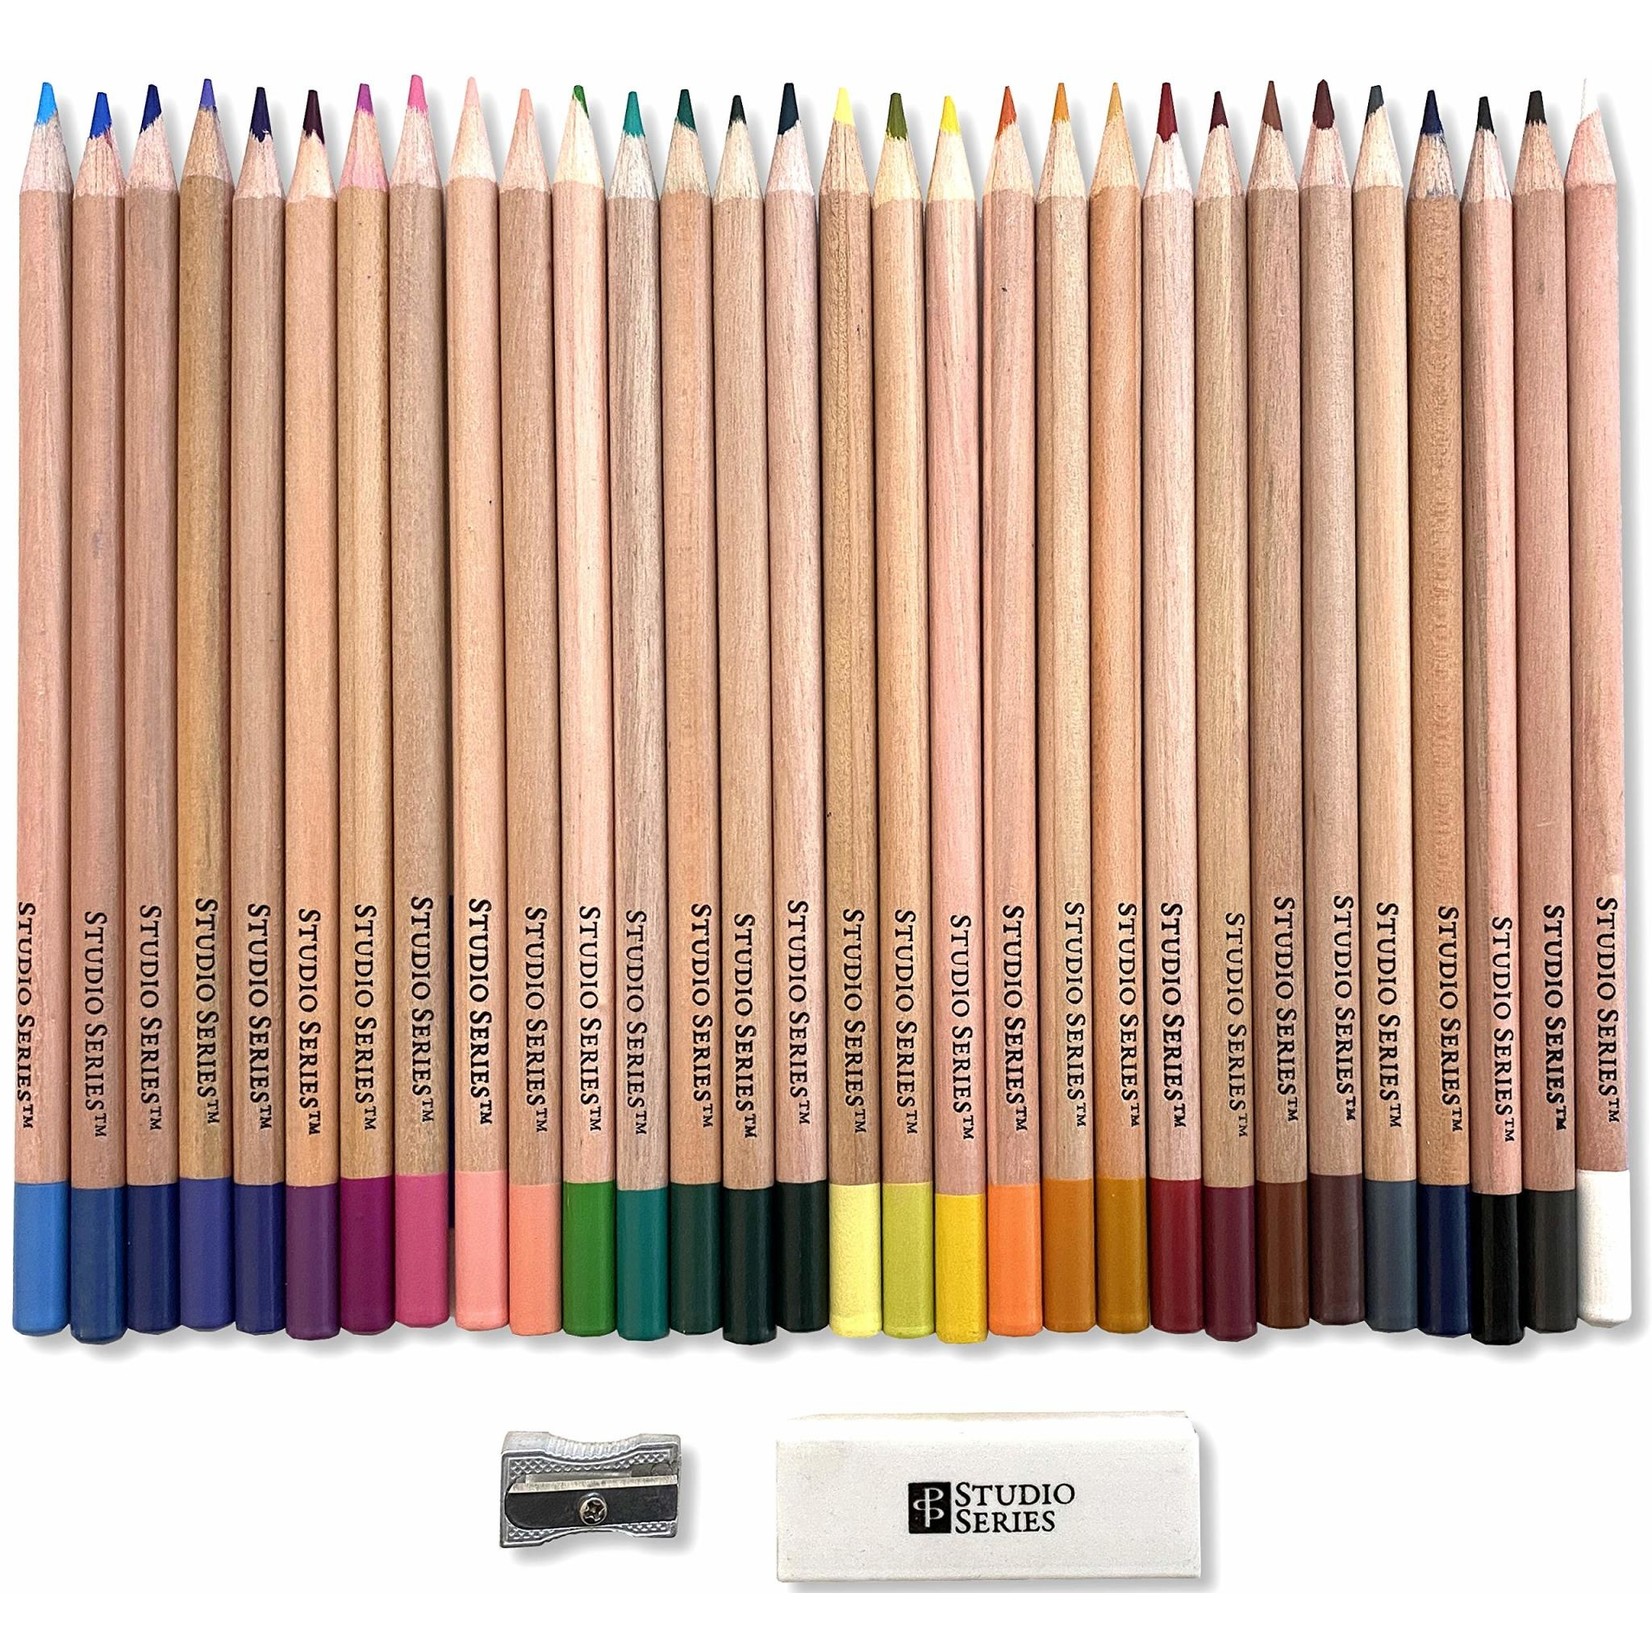 https://cdn.shoplightspeed.com/shops/657021/files/42611532/1652x1652x2/studio-series-colored-pencils-30-piece-set.jpg